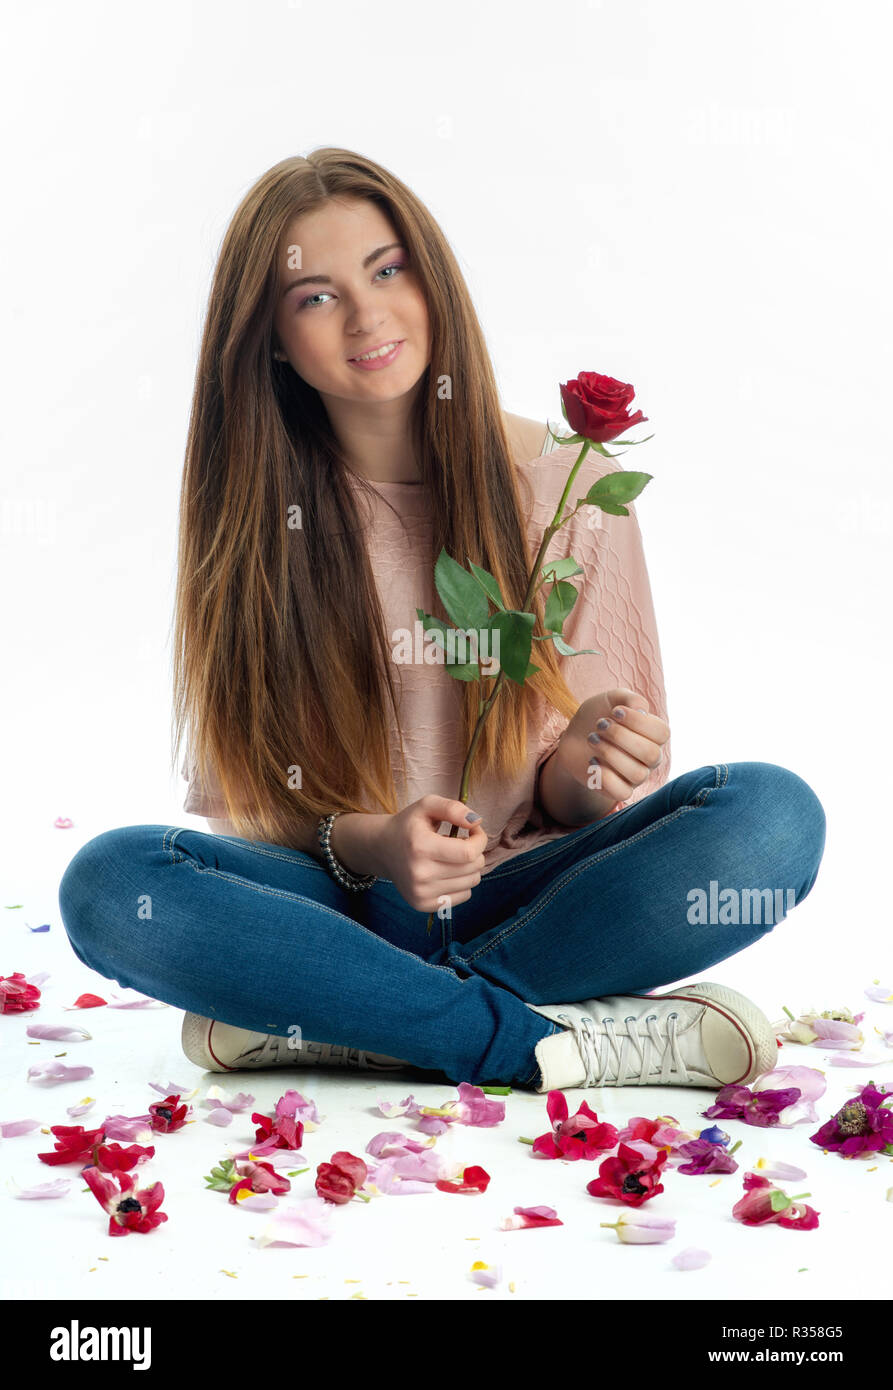 girl sits amid rose petals Stock Photo